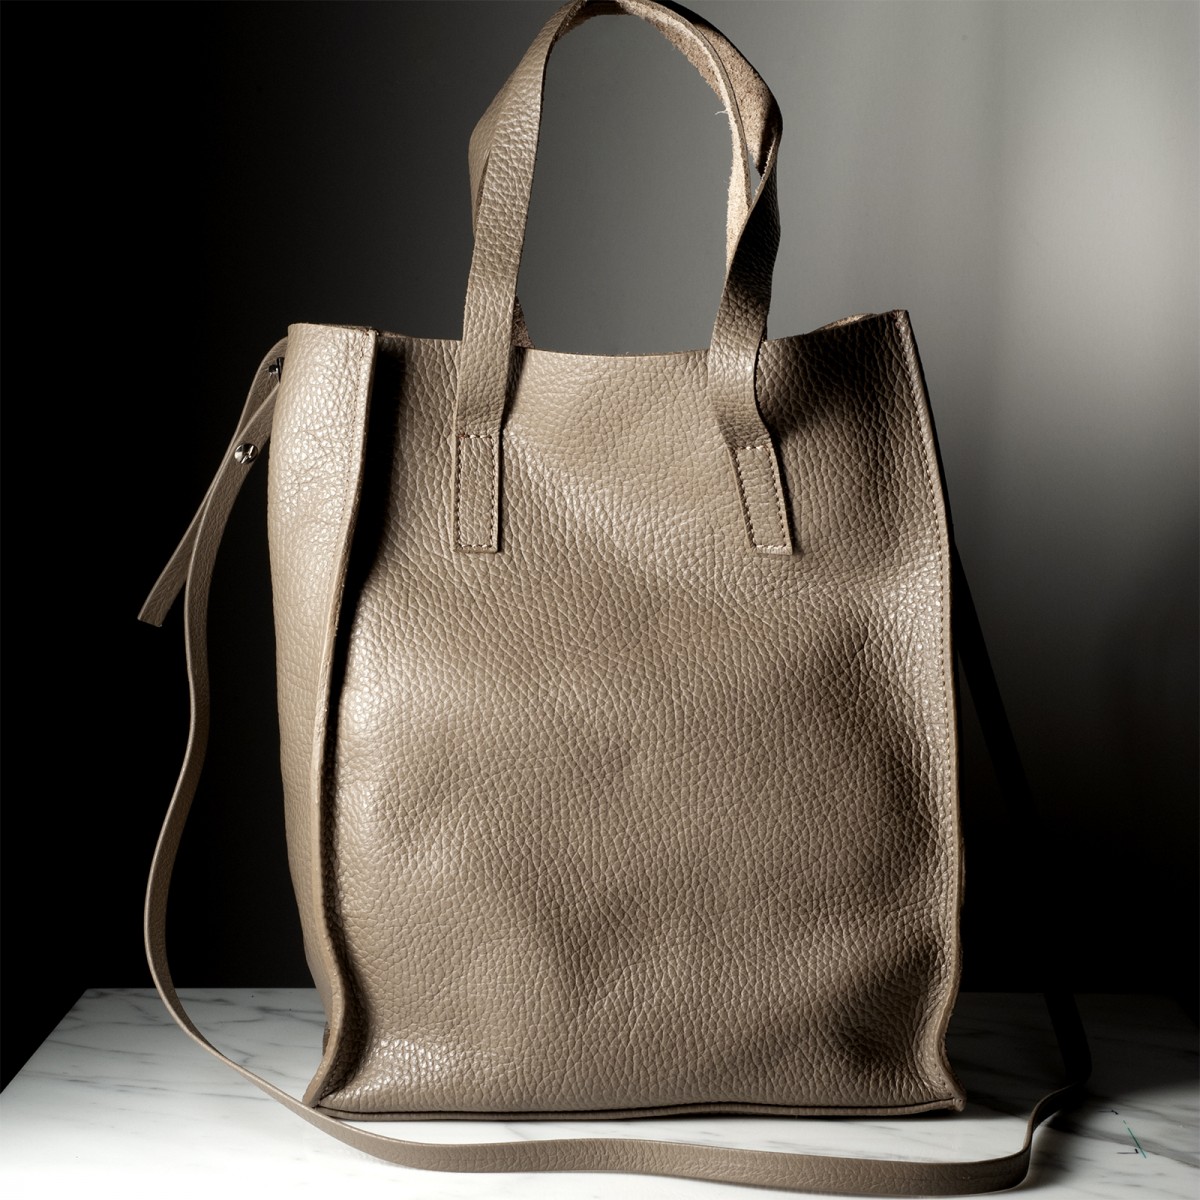 LIVIA - Bull leather little small shopping bag, handmade in Italy